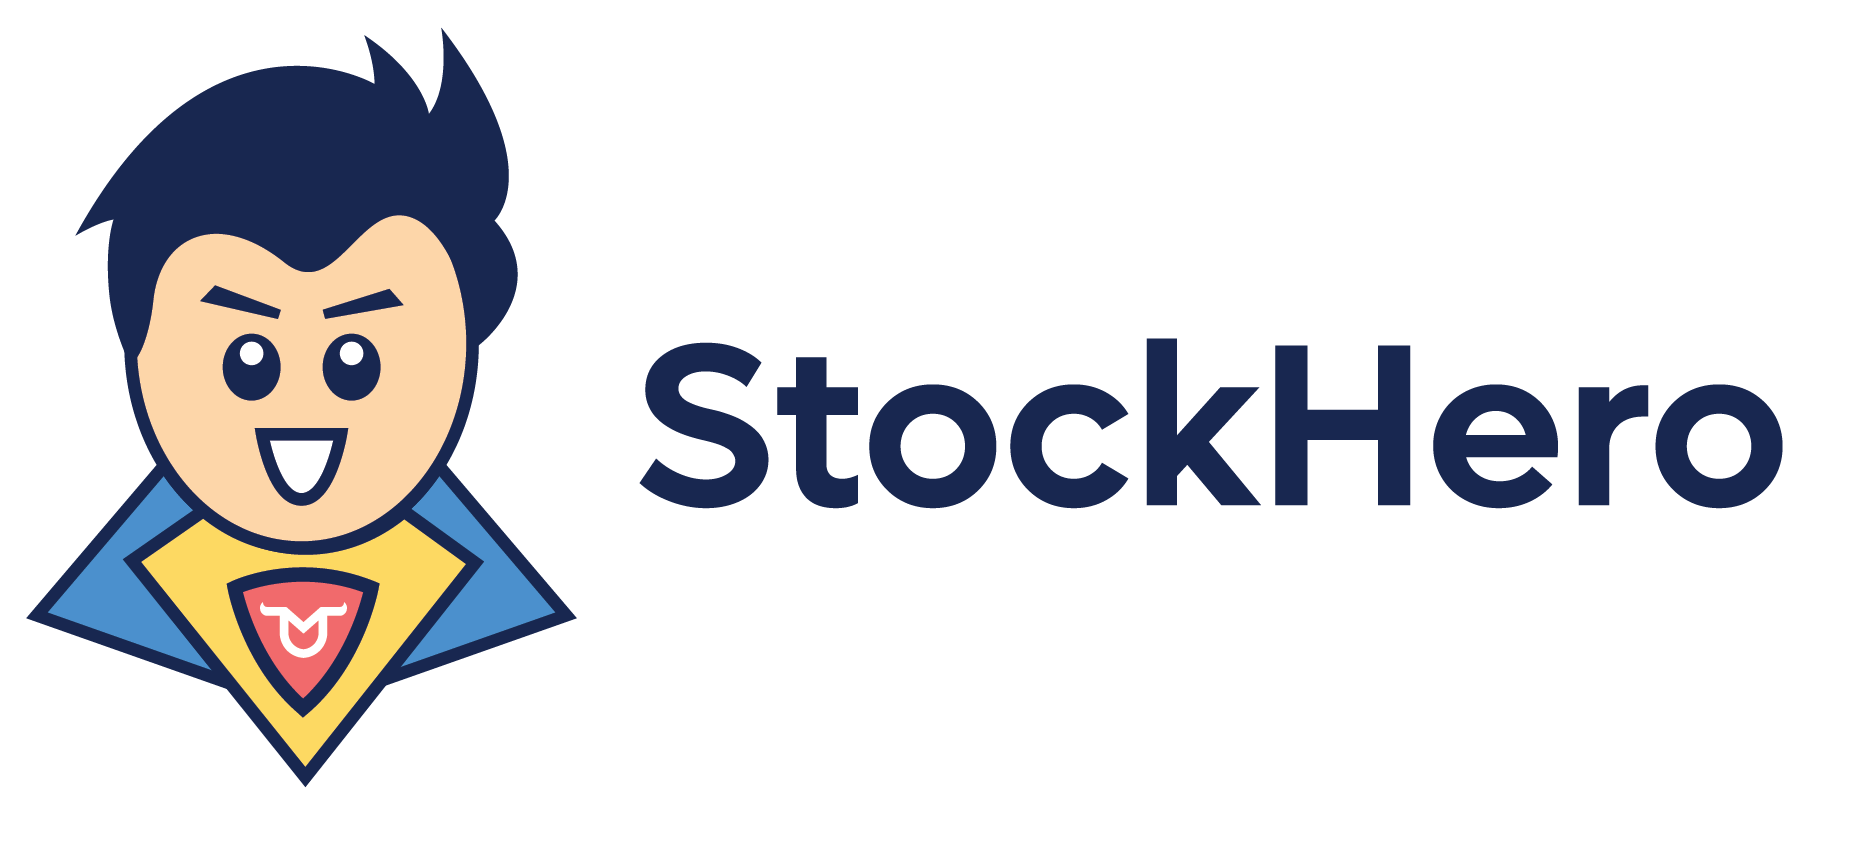 StockHero - Stock Trading Bot Logo